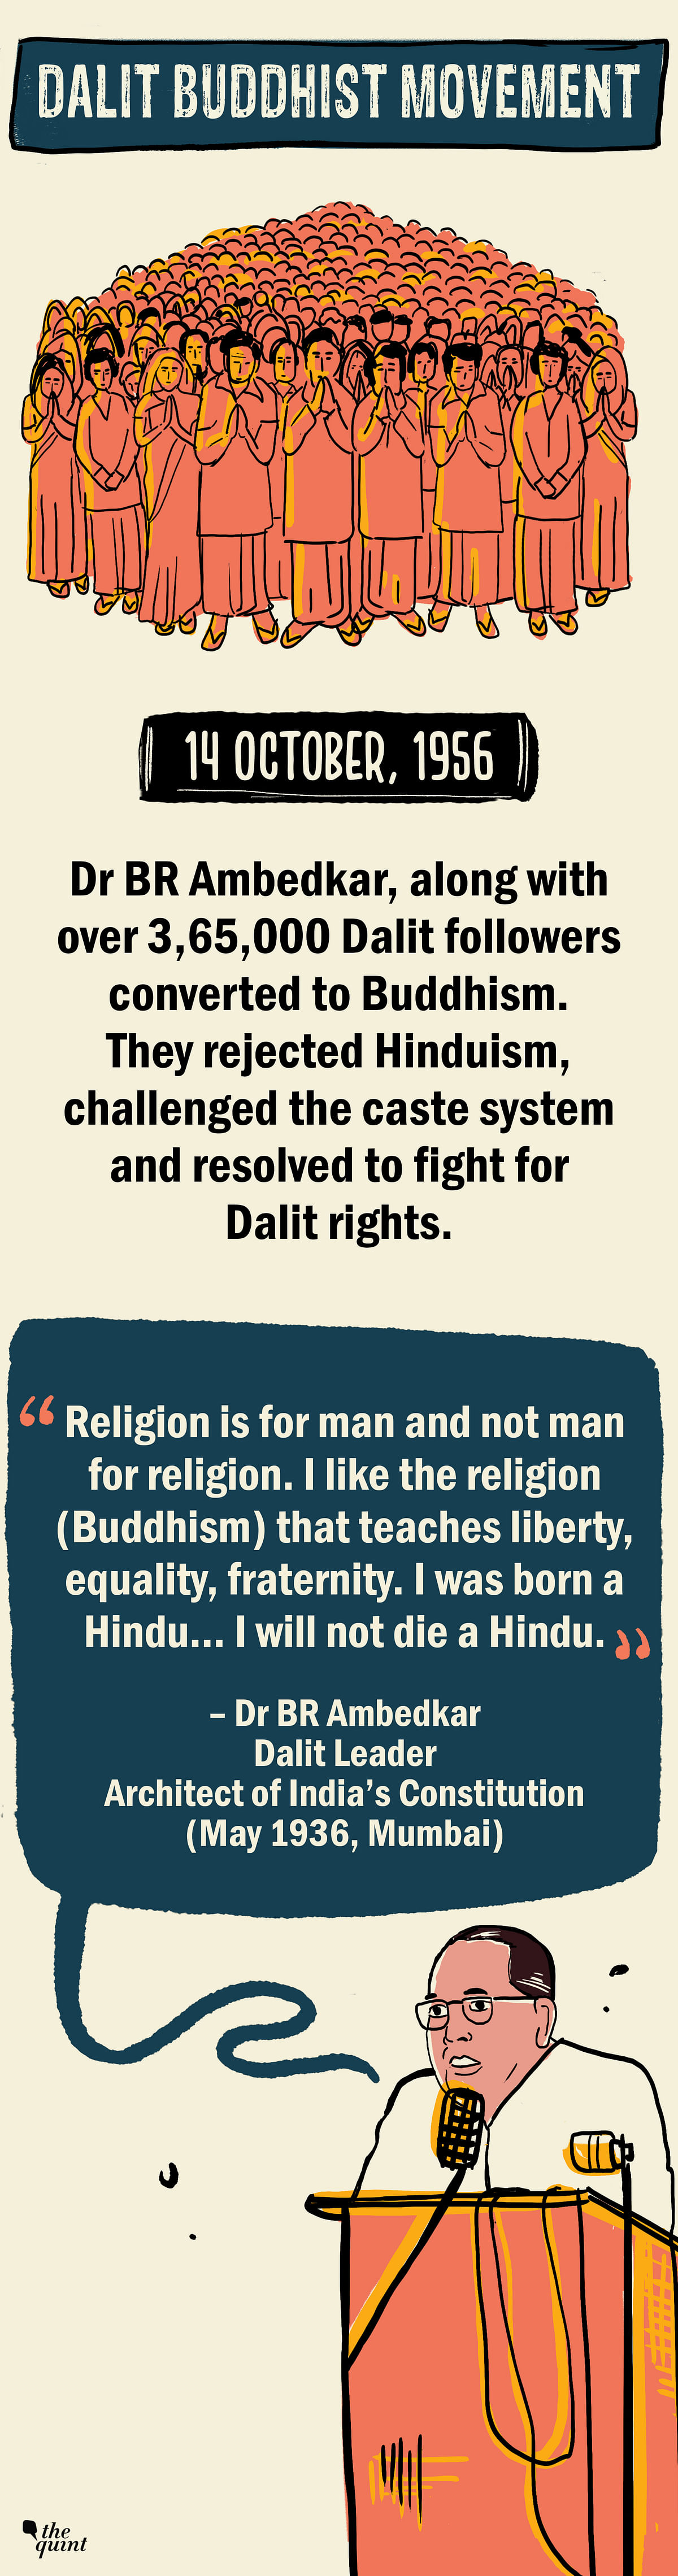 "I was born a Hindu… I will not die a Hindu," BR Ambedkar had said, addressing his followers in Mumbai in 1936. 